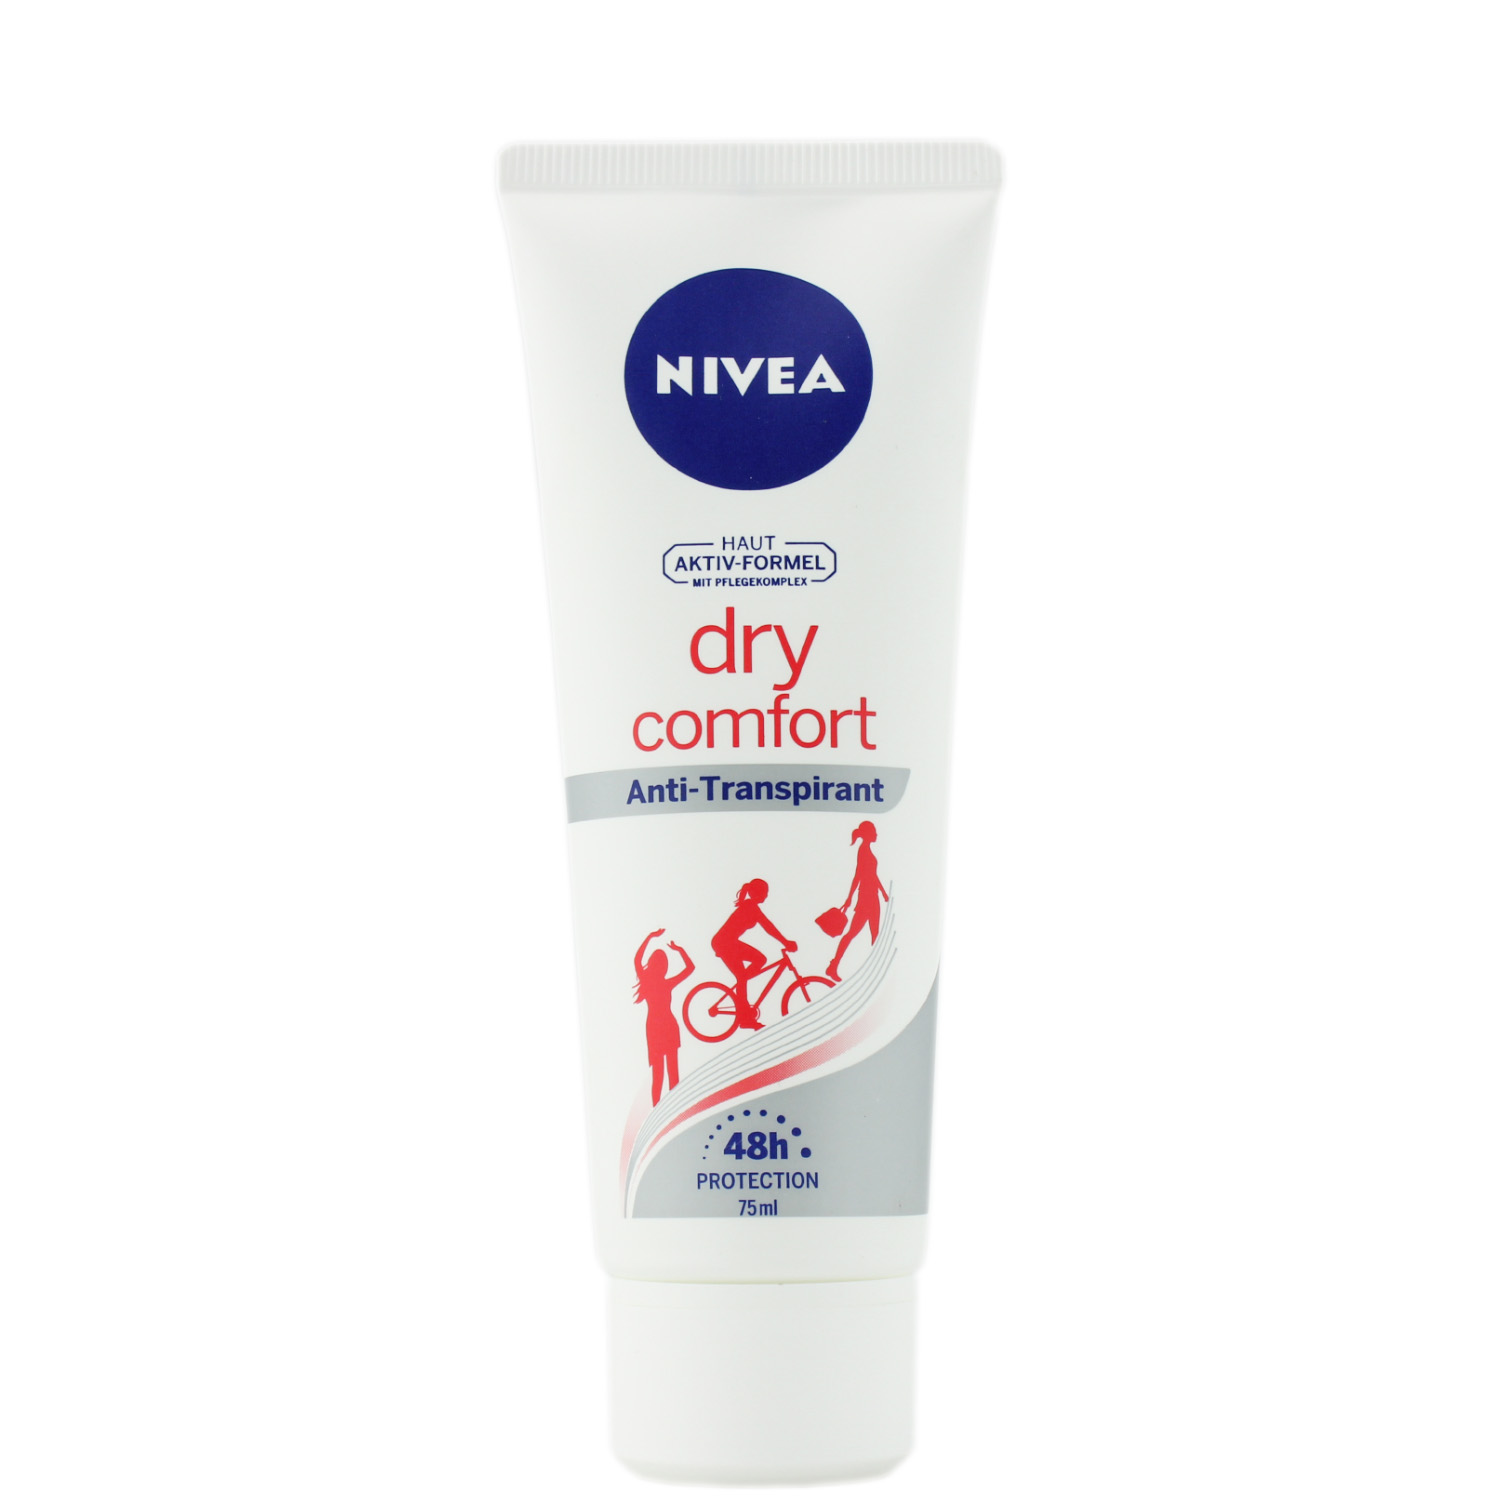 Nivea Dry Comfort Anti-Transpirant Deodorant Creme 75ml